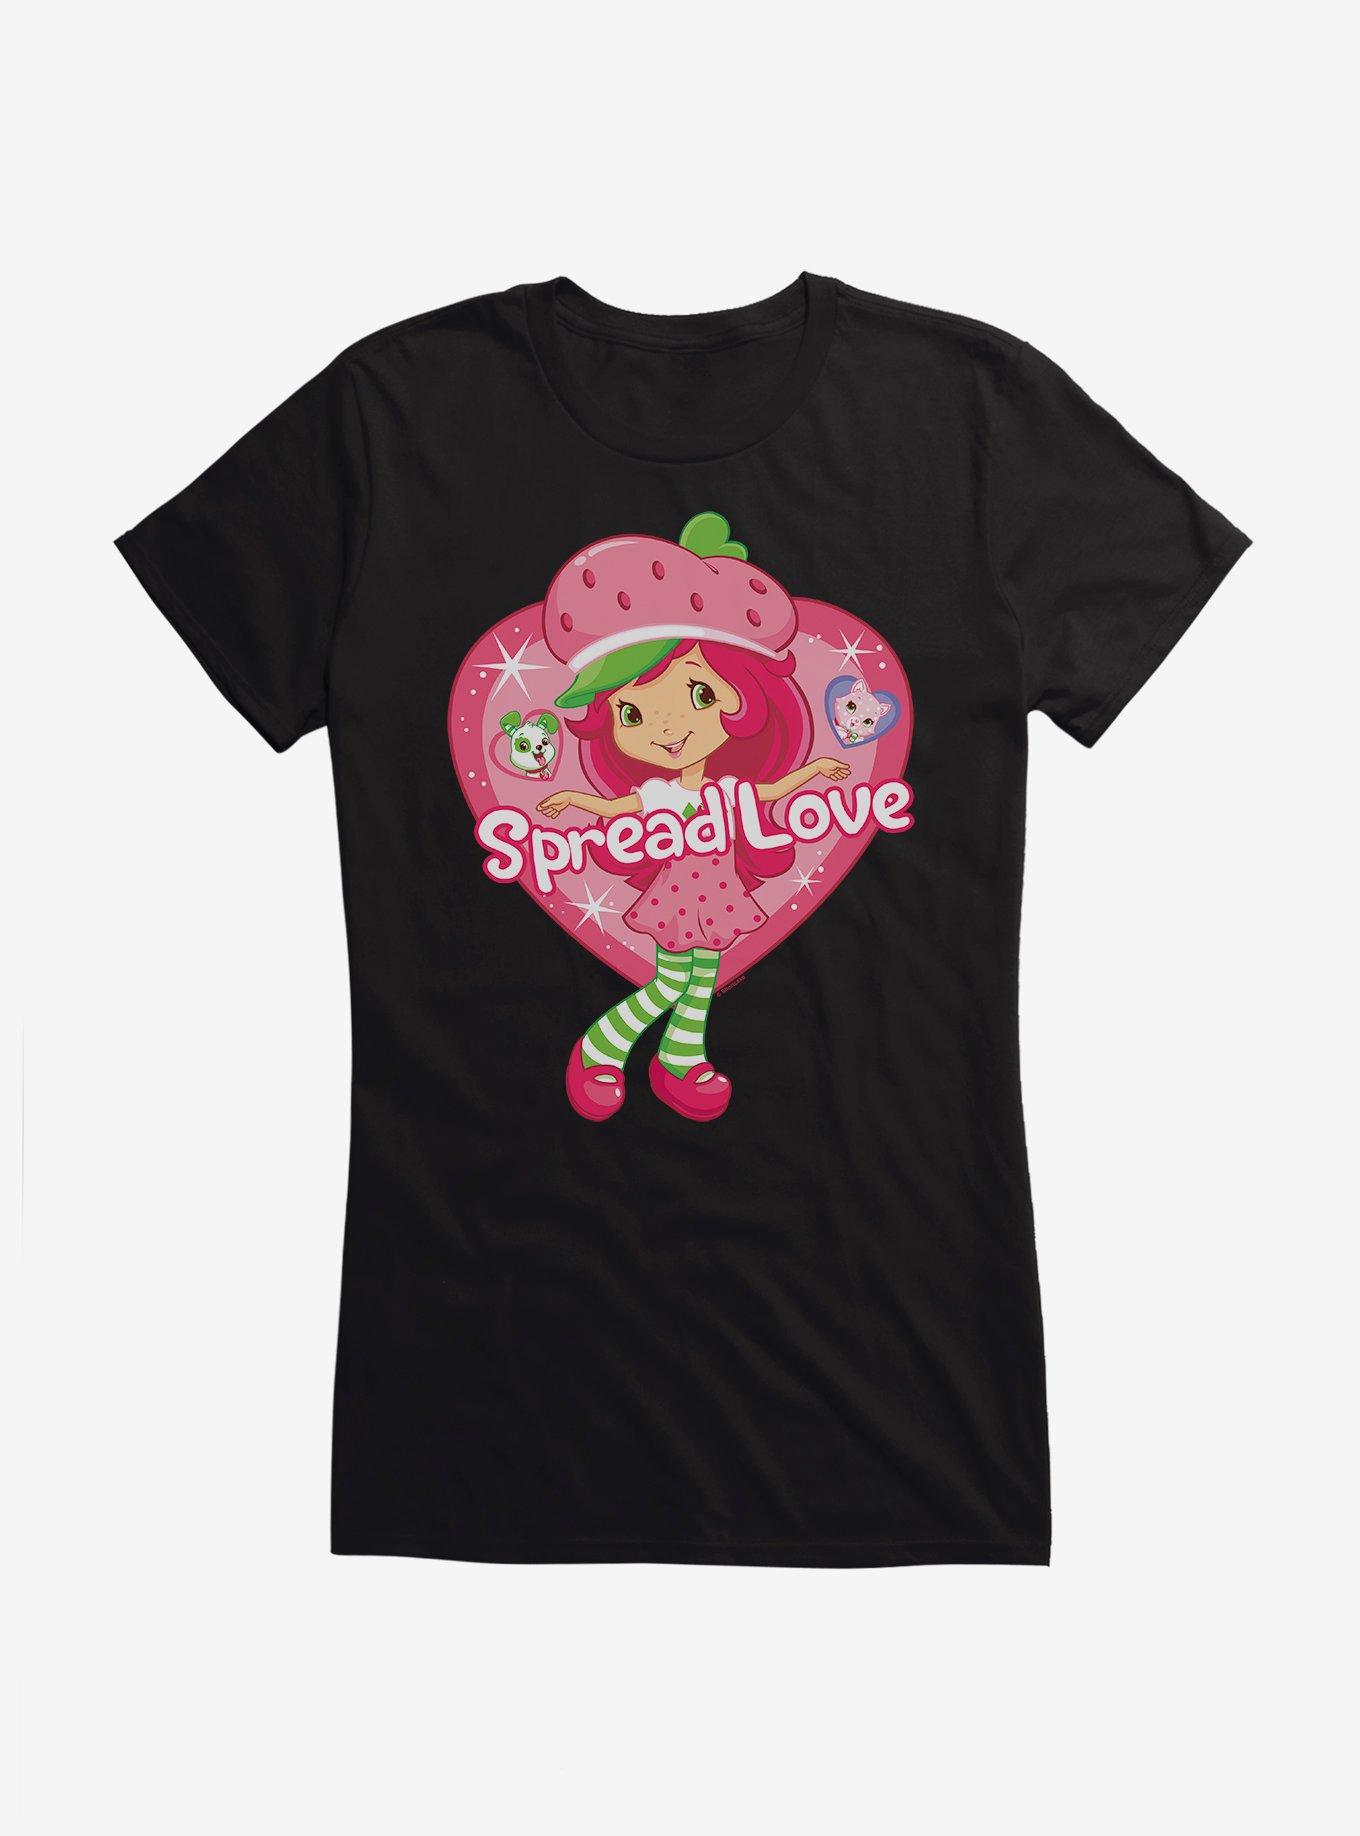 Strawberry Shortcake Spread Love Girls T-Shirt